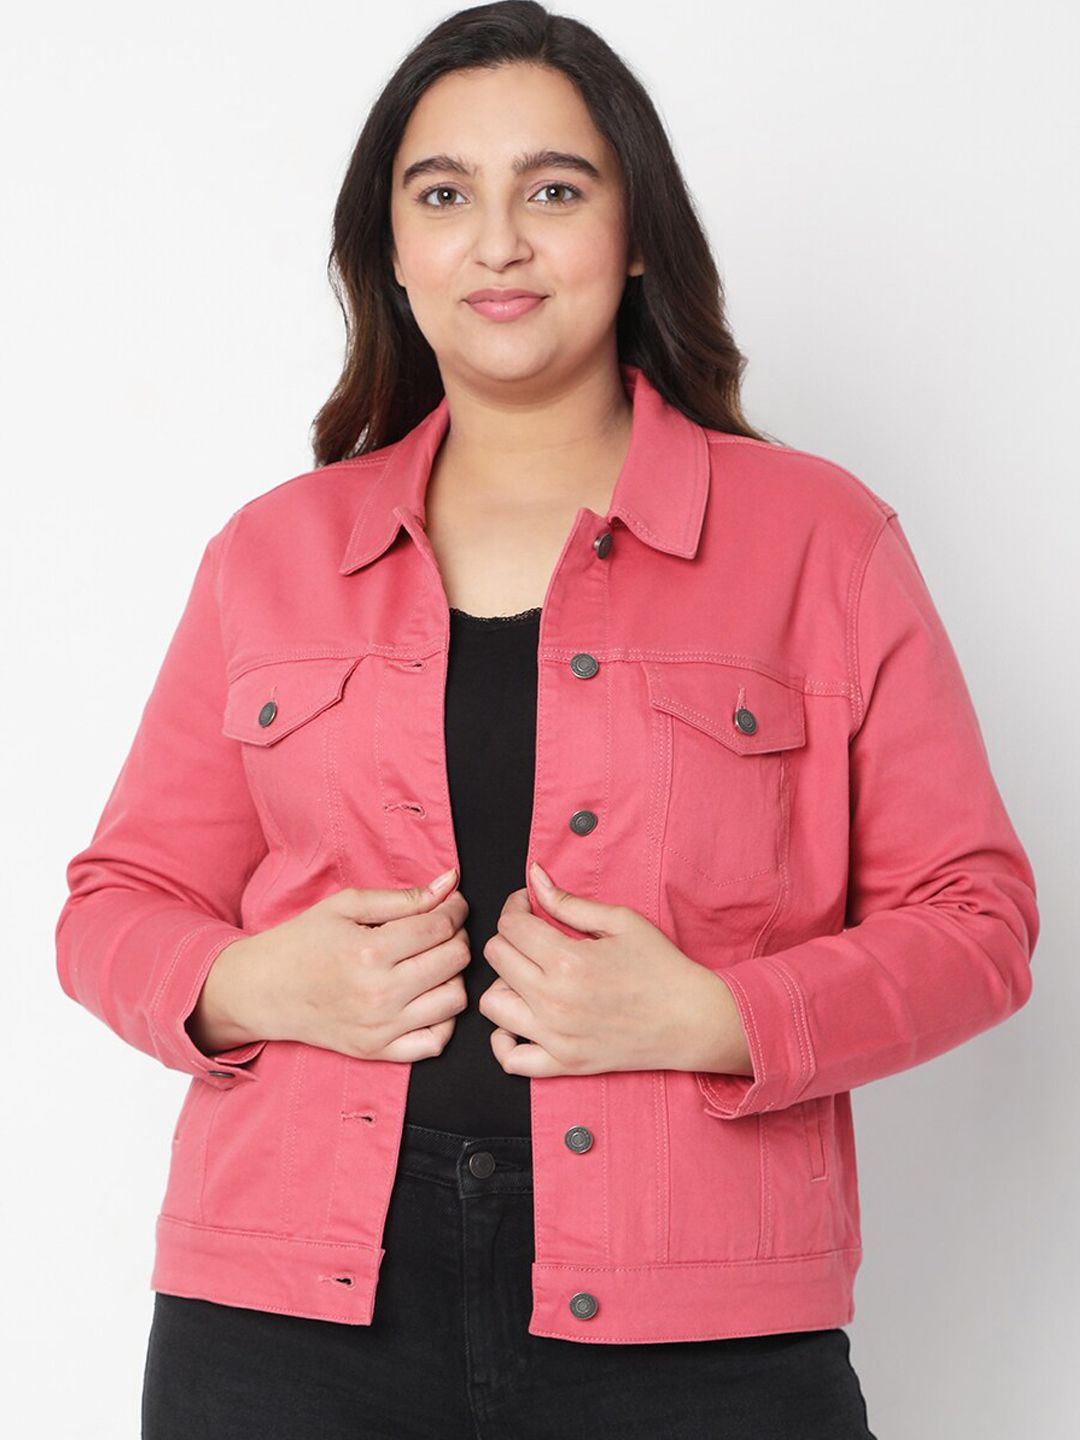 Vero Moda Women Pink Denim Jacket Price in India